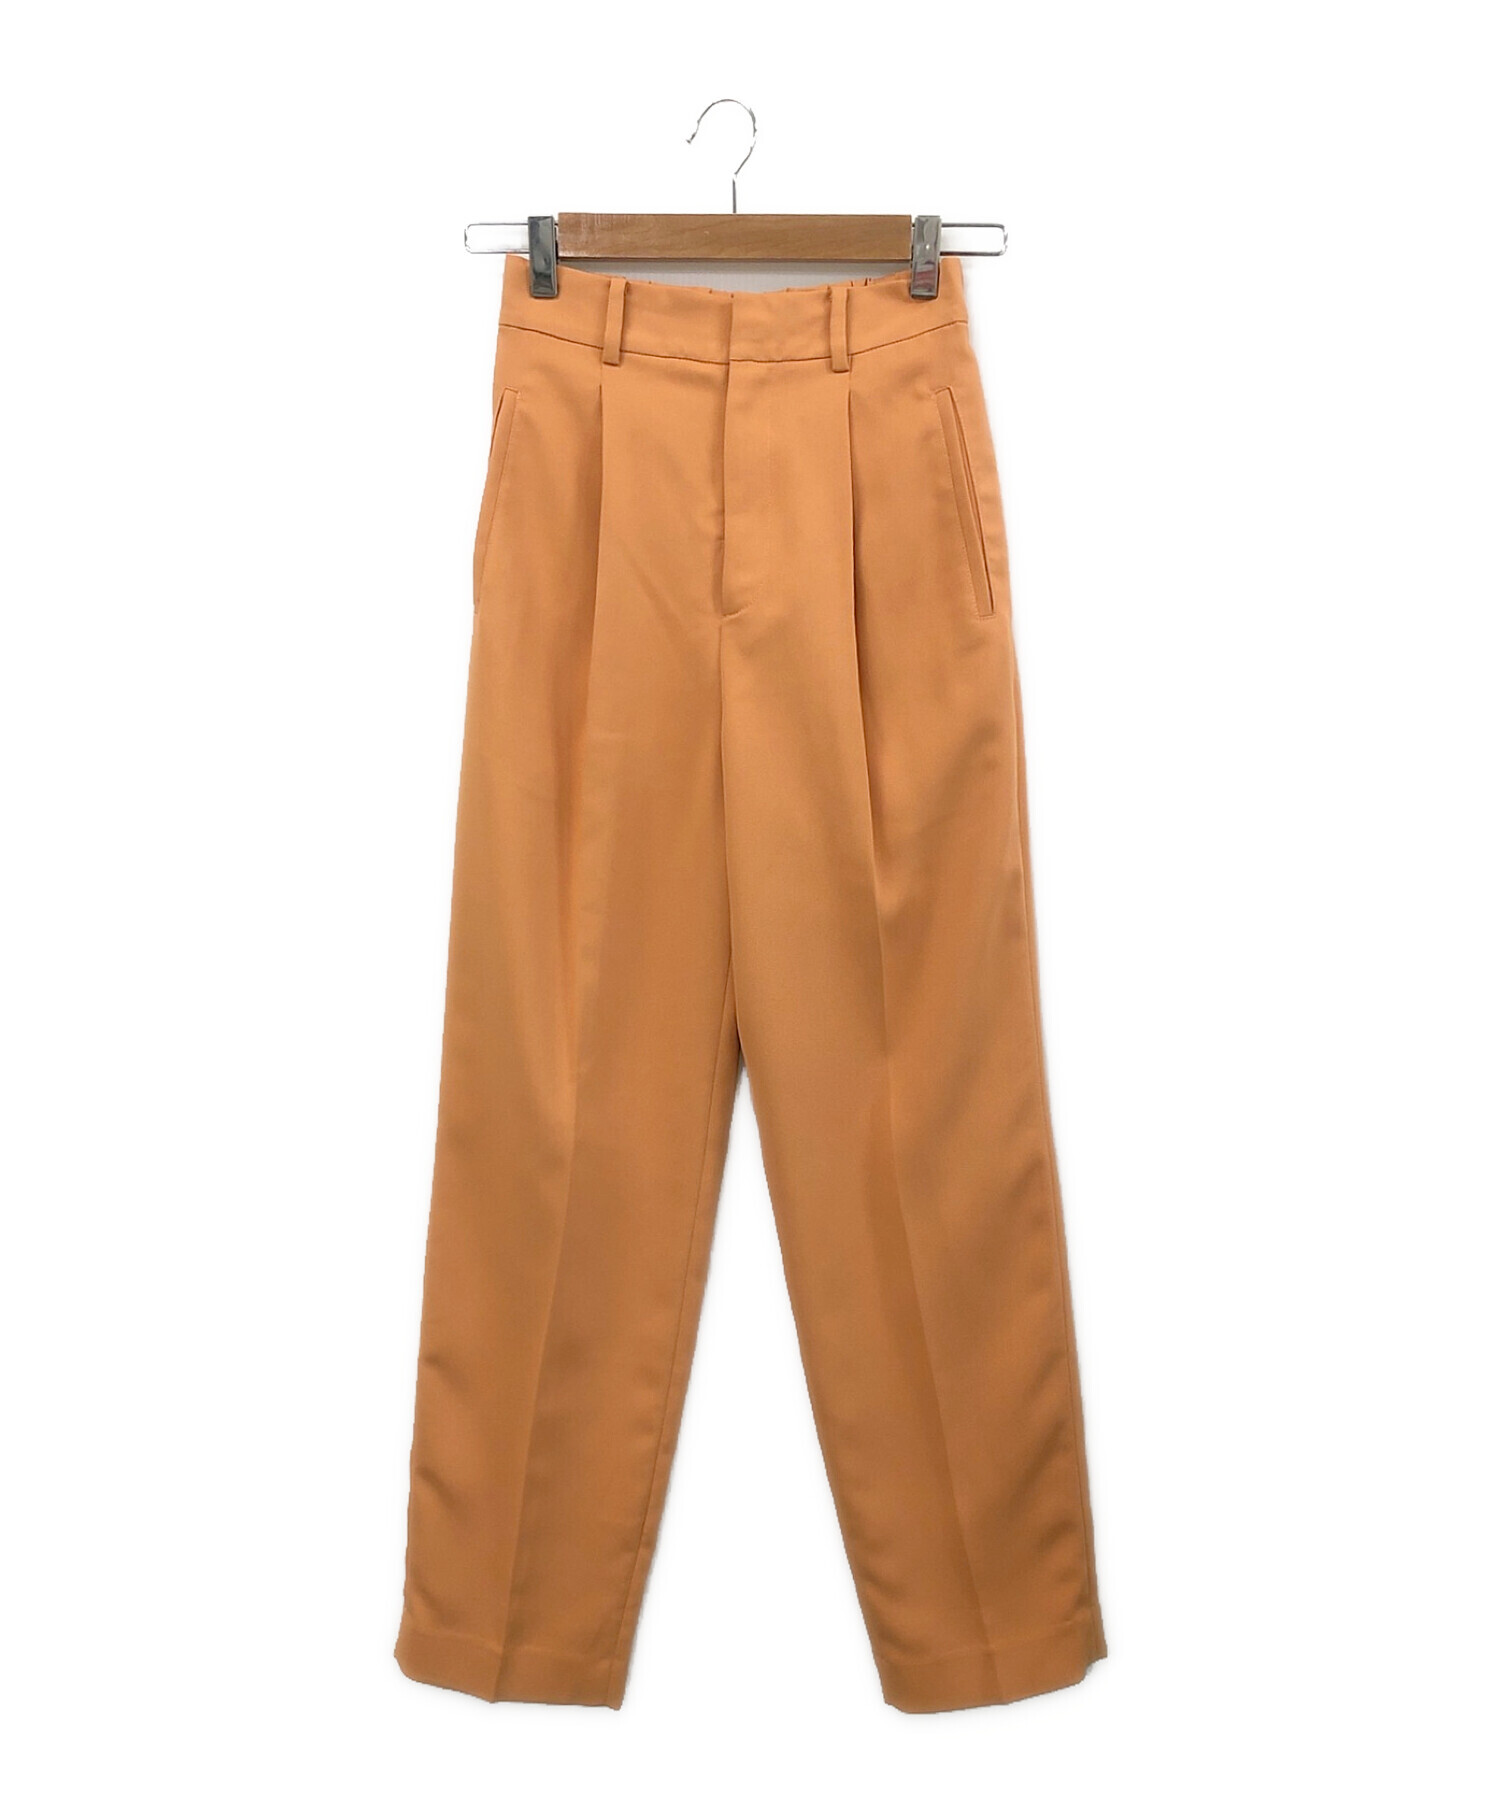 AMERI (アメリ) SQUAMOUS TEXTILE TAPERED PANTS オレンジ サイズ:S